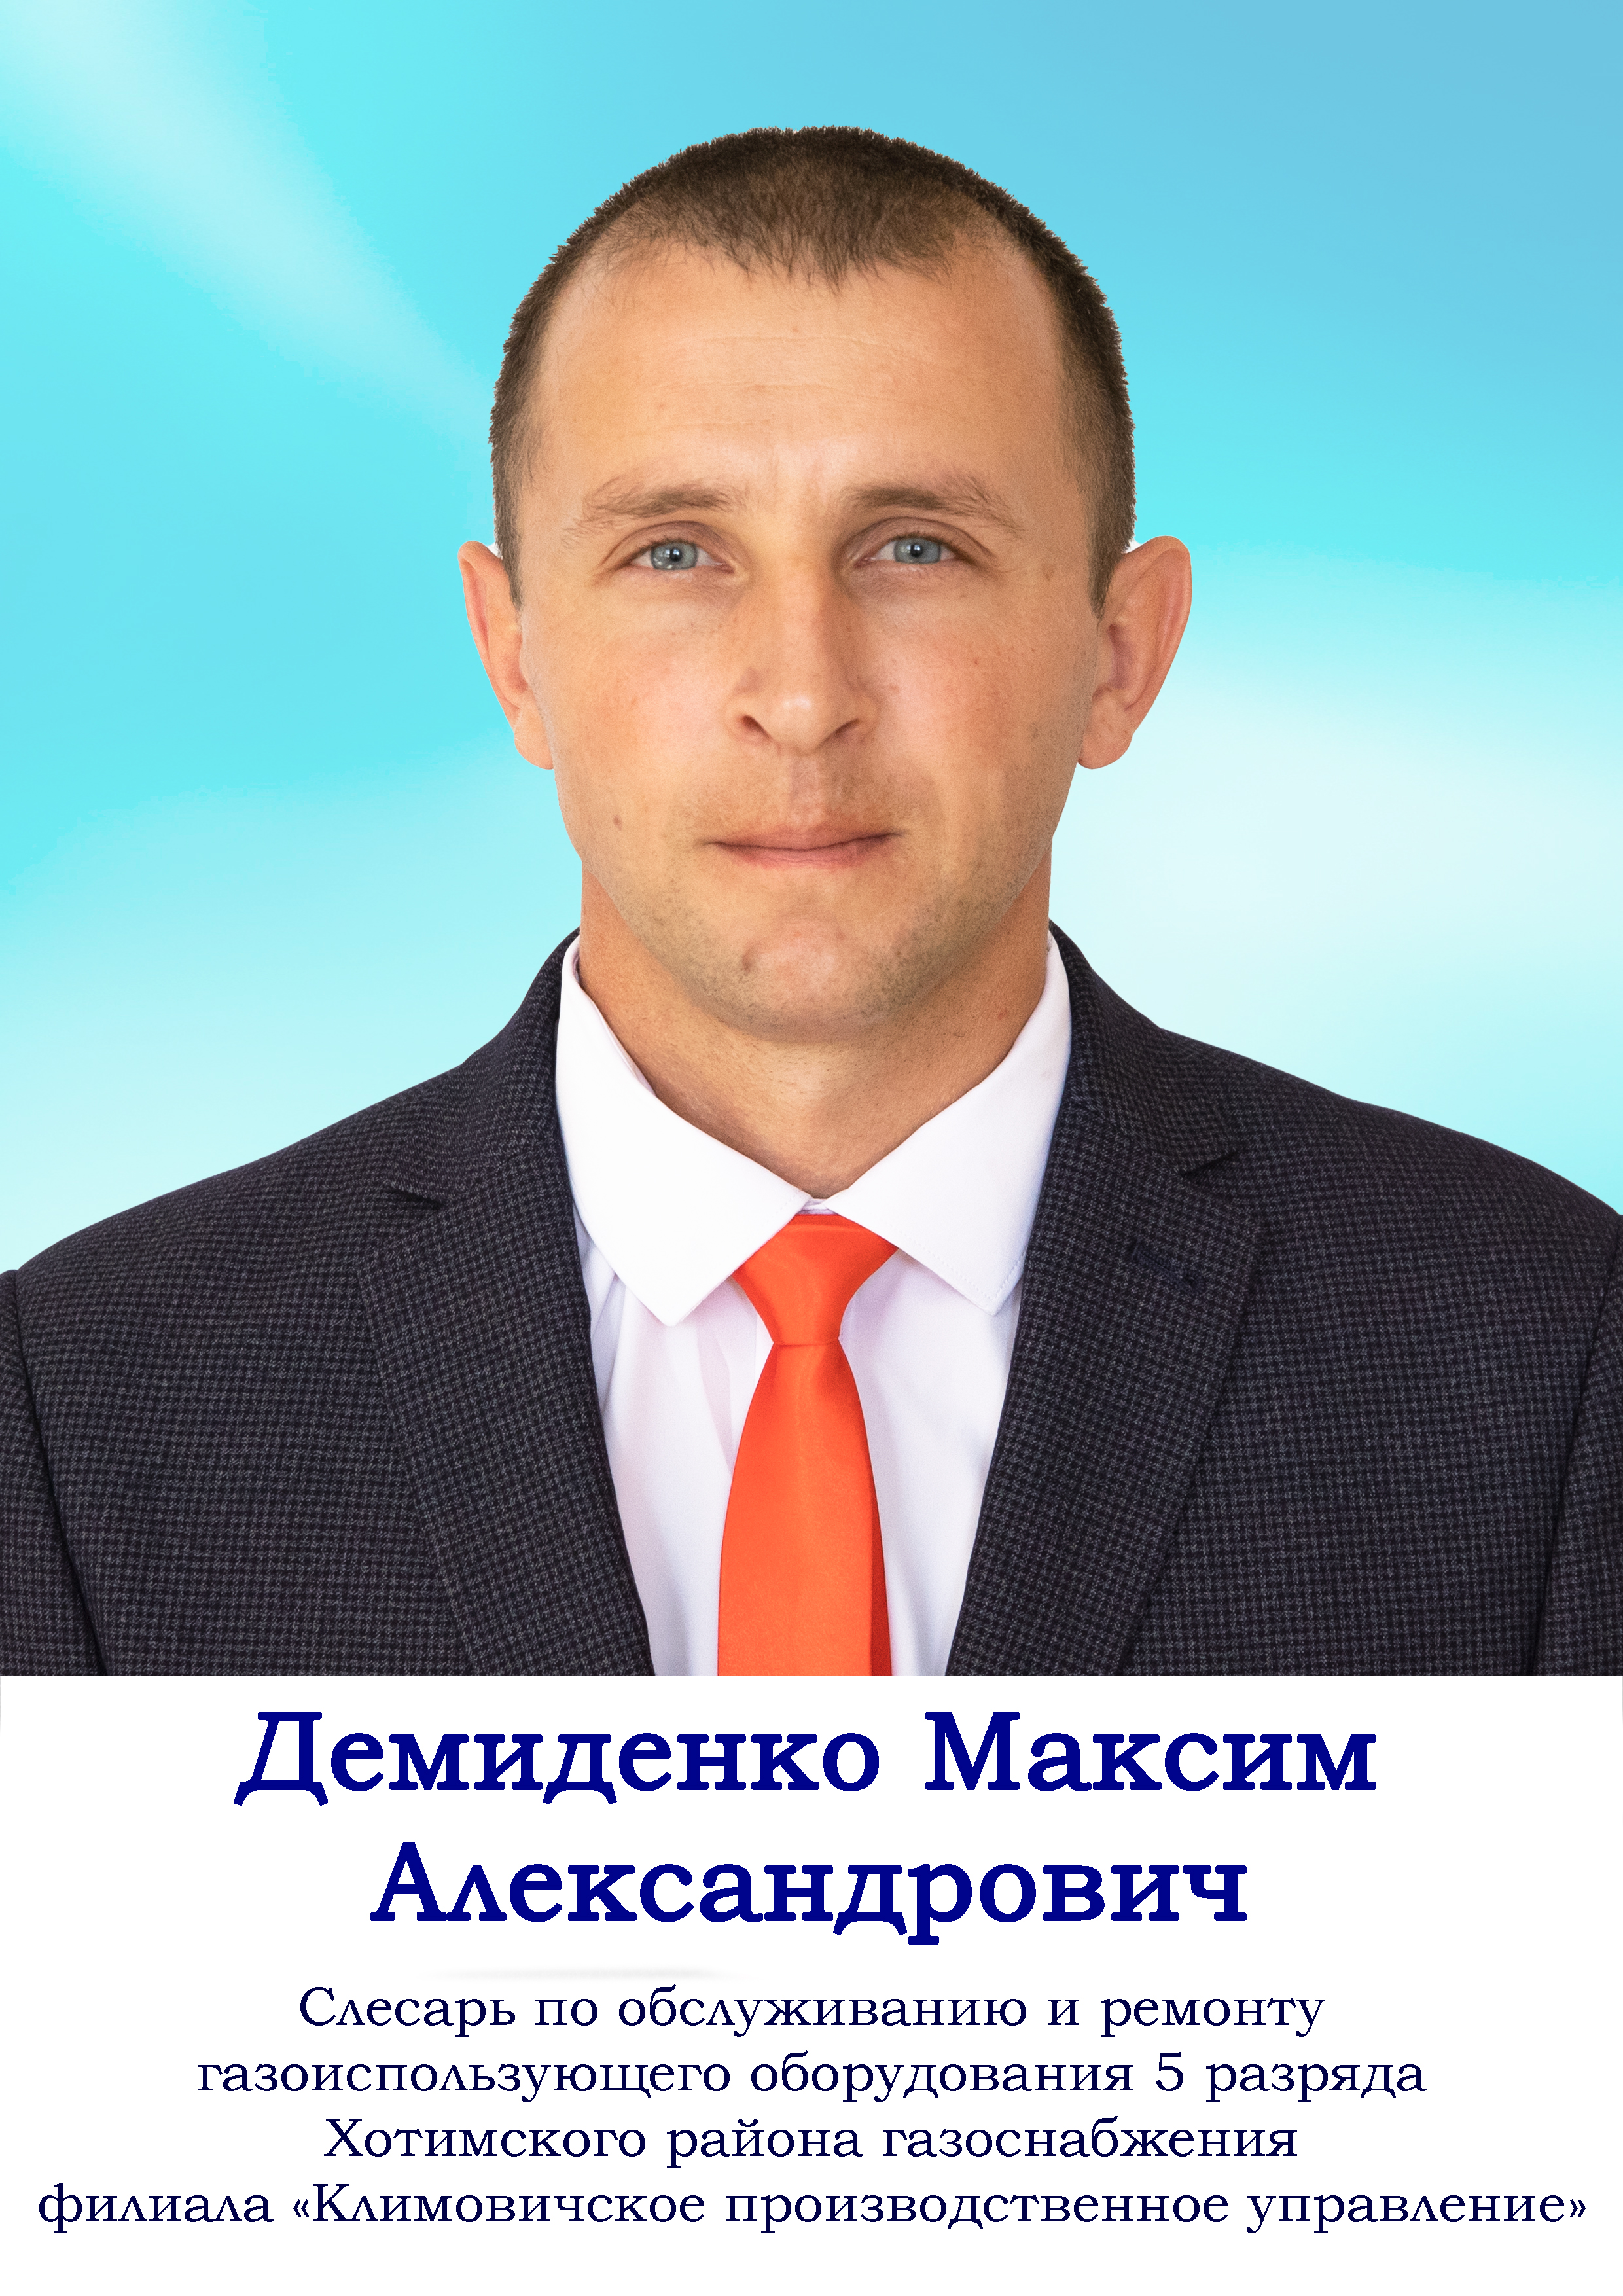 Демиденко Максим Александрович